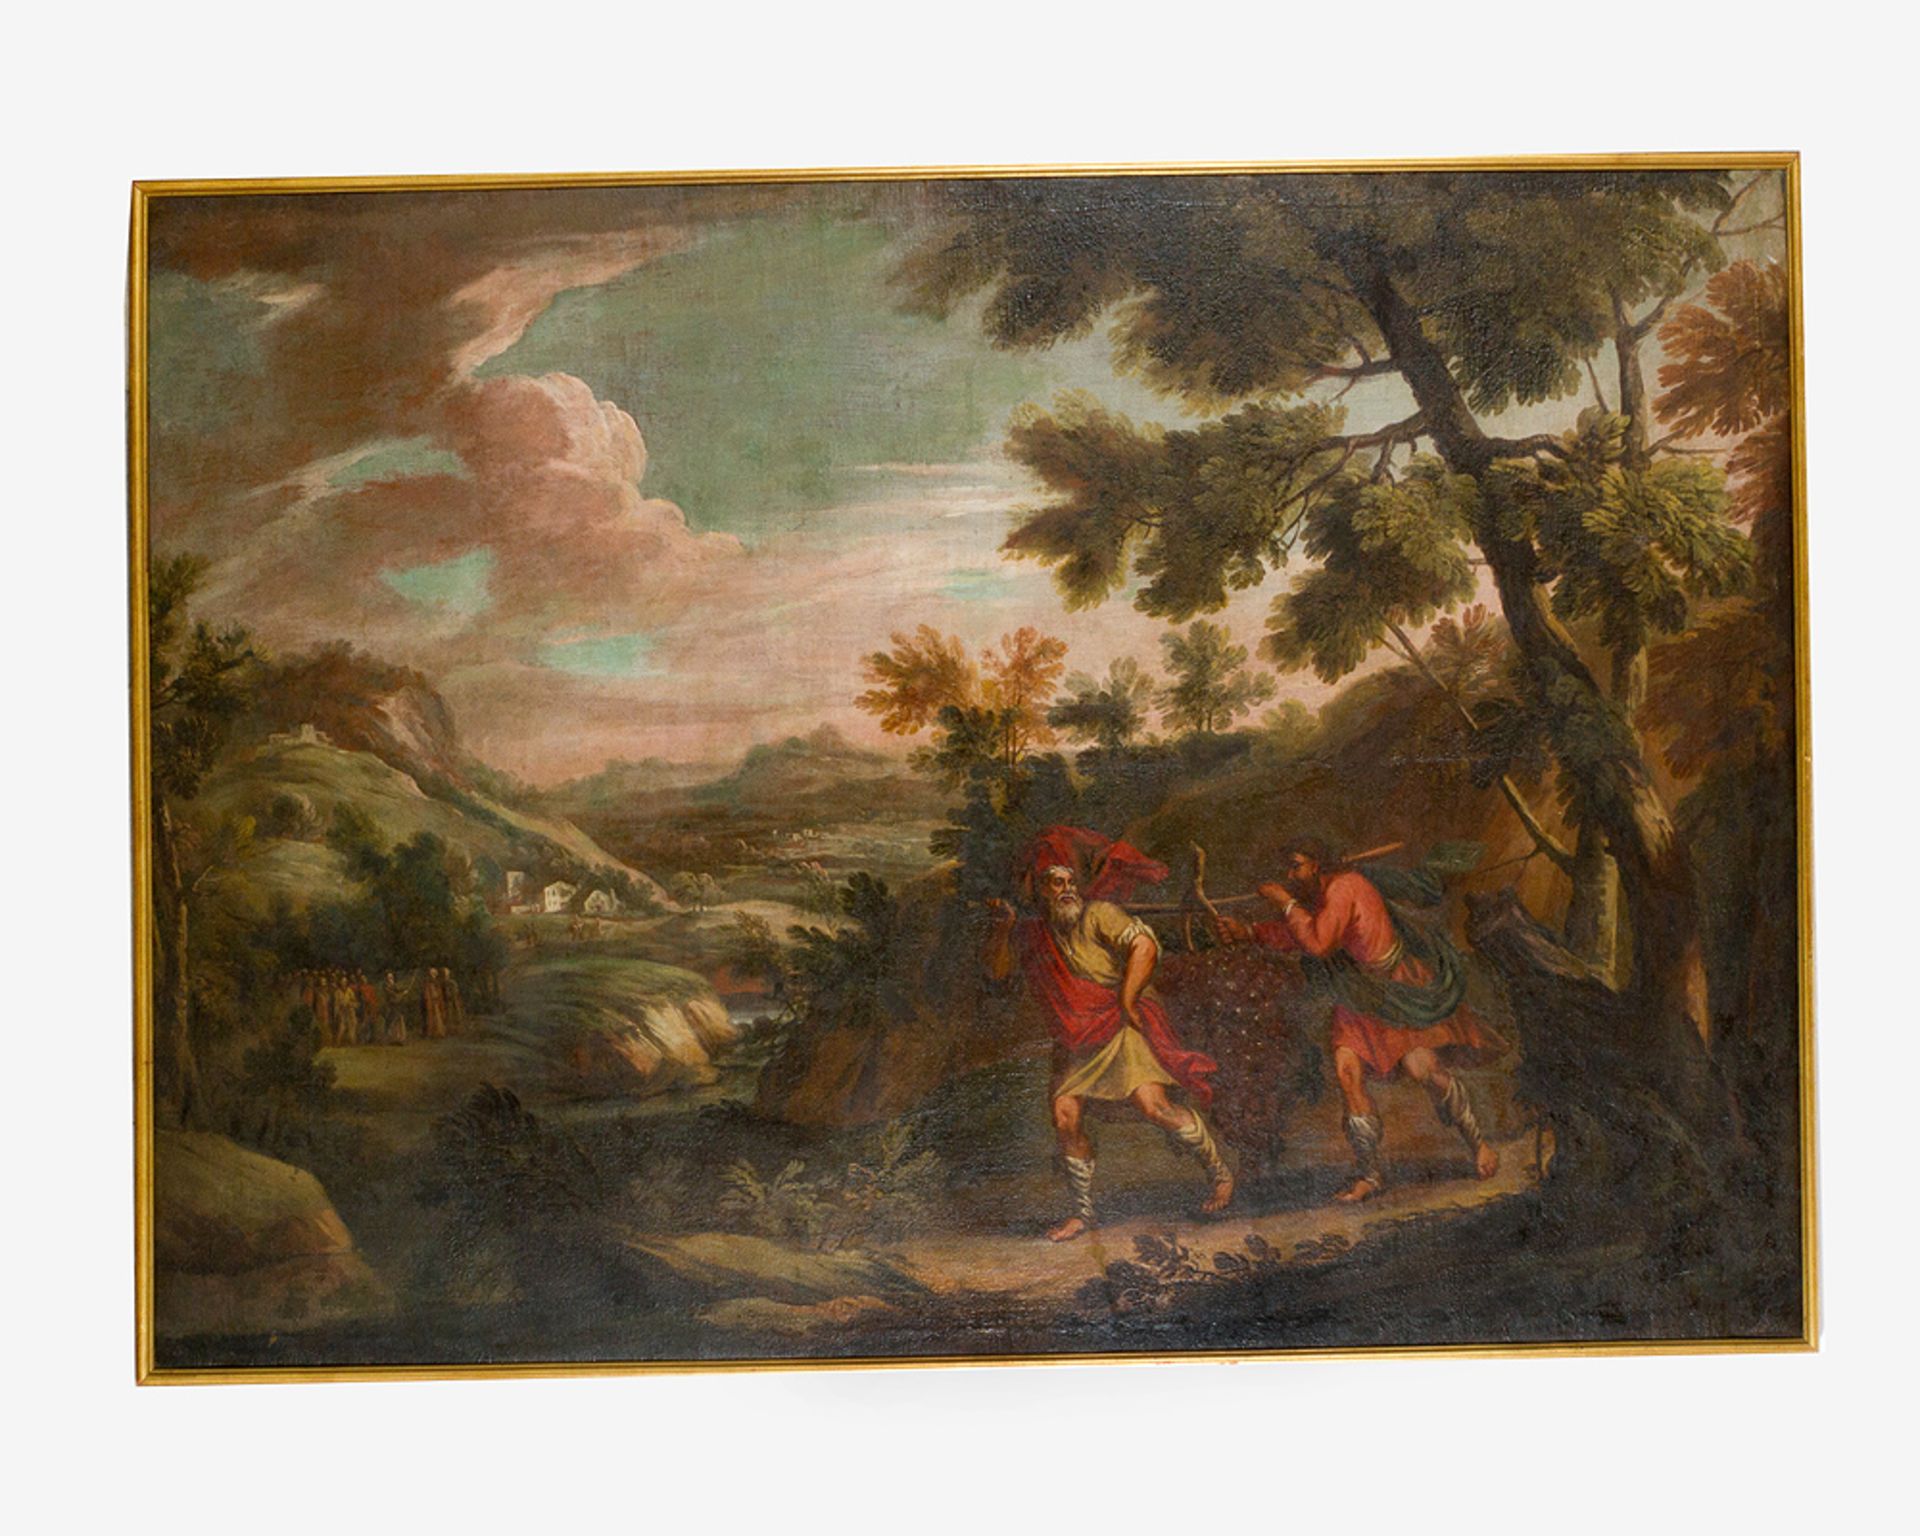 North Italian artist around 1700